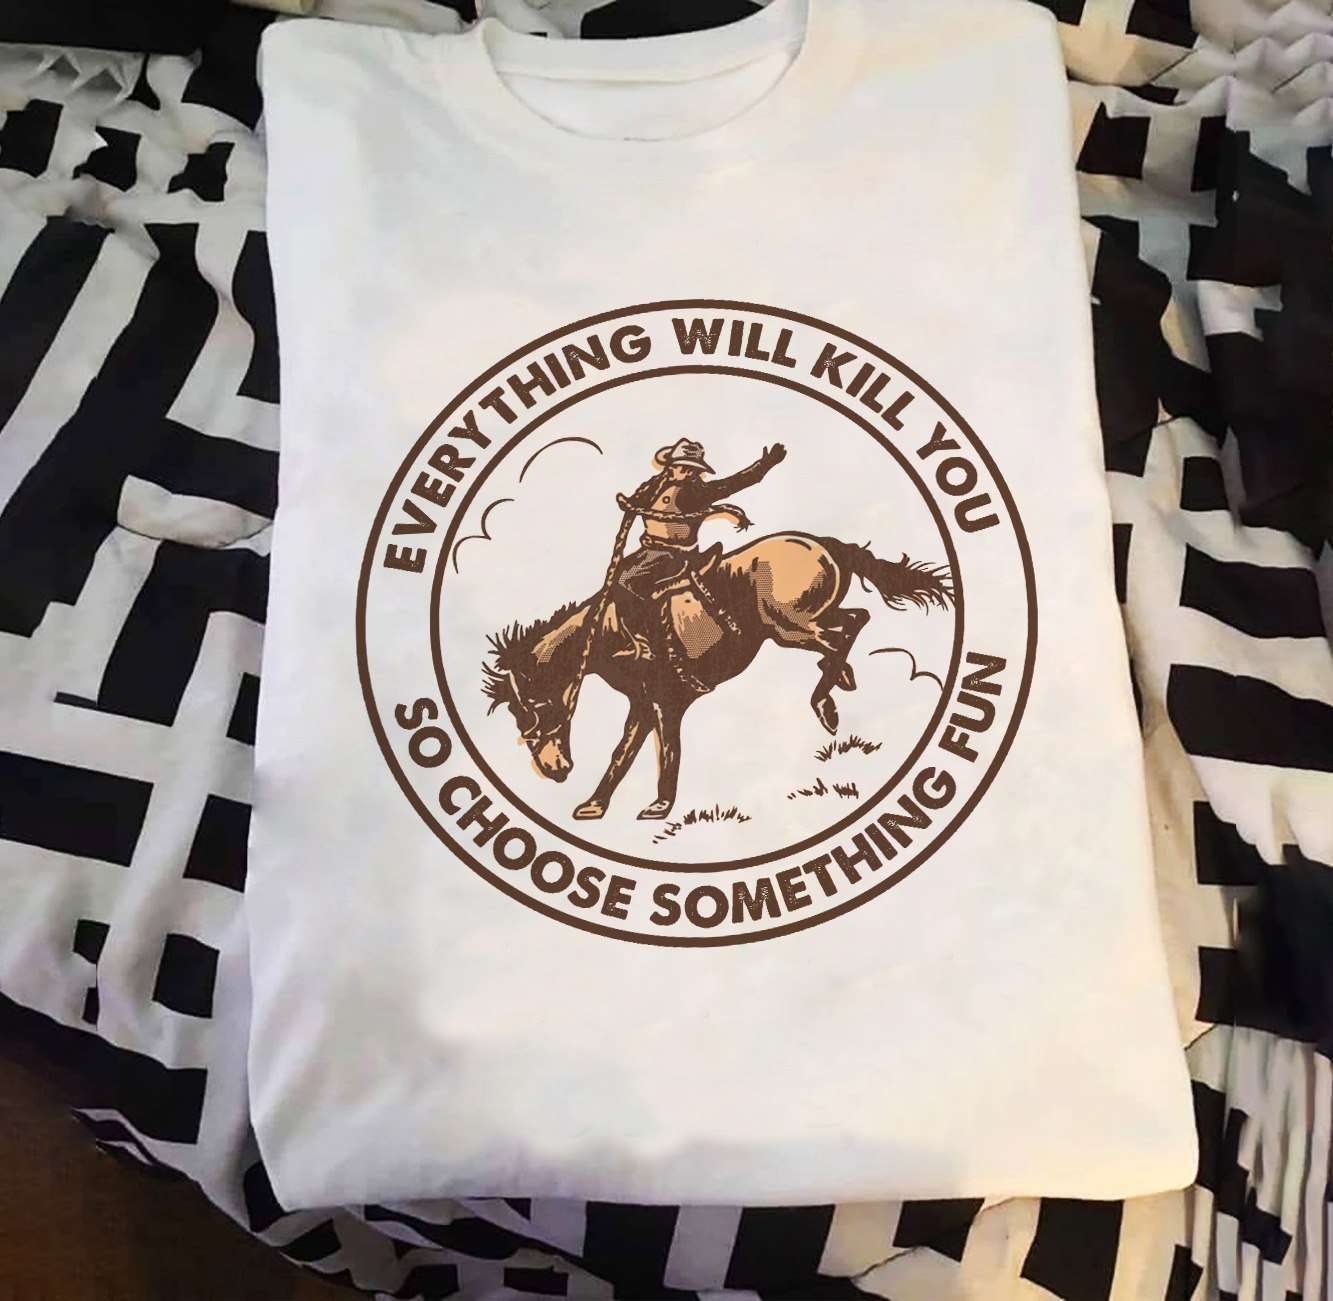 Cowboy Ride Horse - Everything will kill you so choose something fun